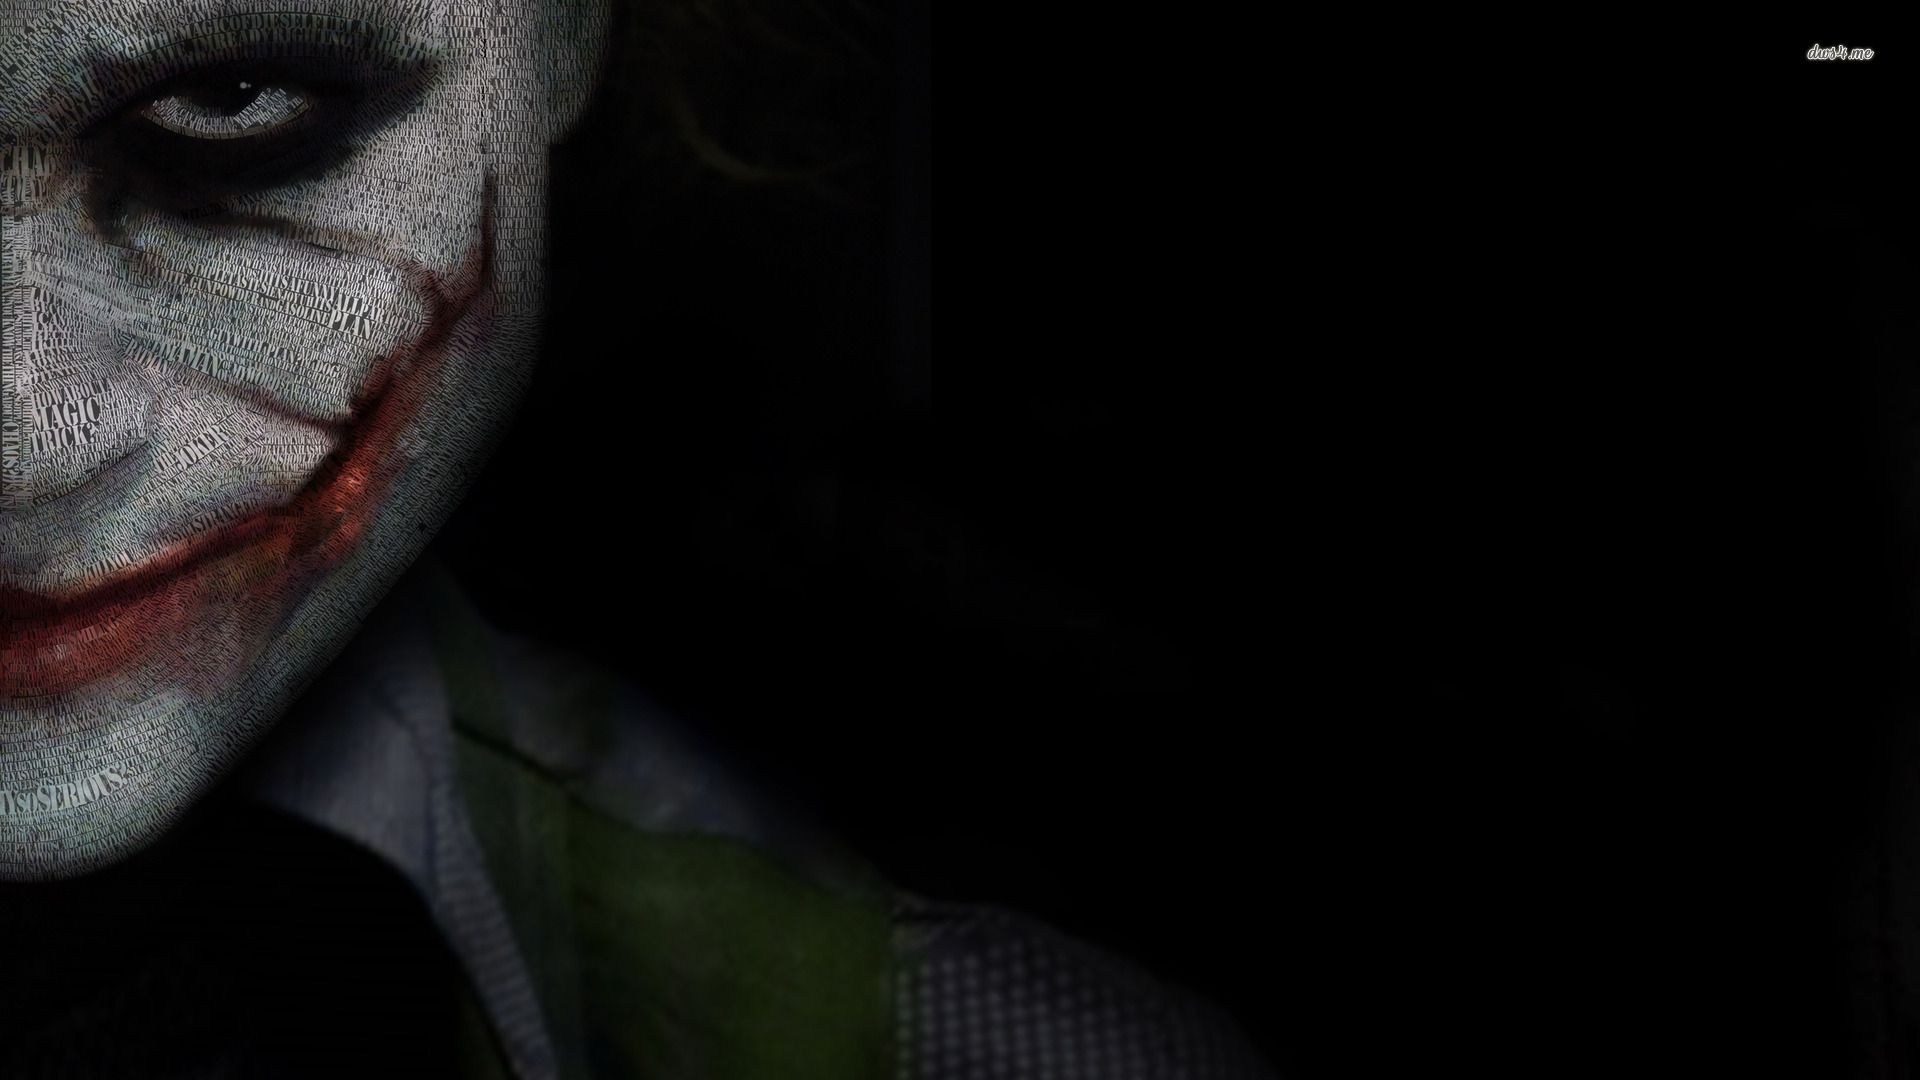 Joker - The Dark Knight Rises wallpaper - Movie wallpapers -